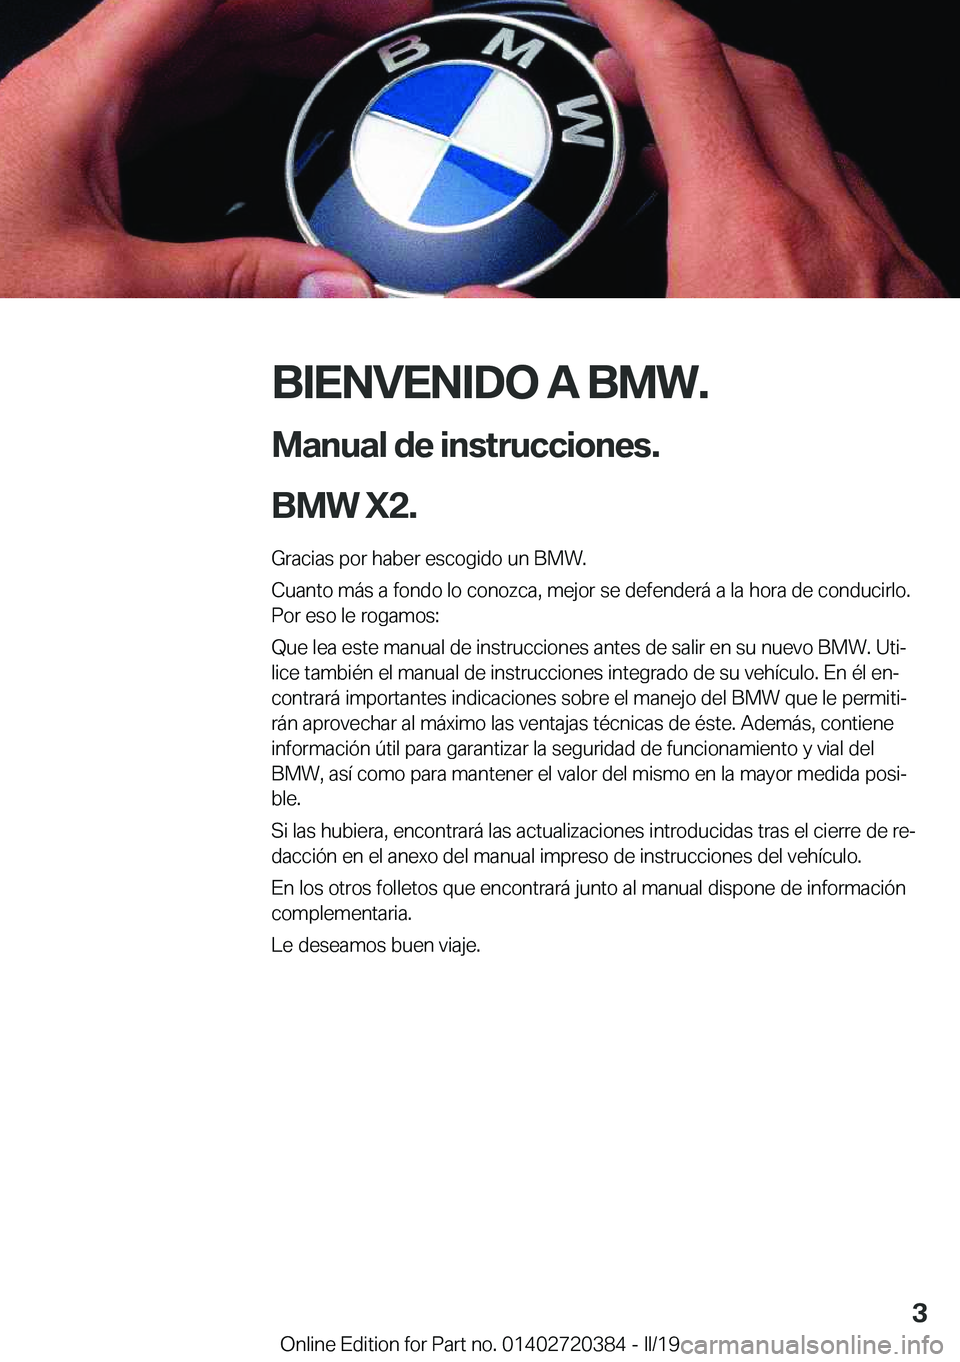 BMW X2 2019  Manuales de Empleo (in Spanish) �B�I�E�N�V�E�N�I�D�O��A��B�M�W�.
�M�a�n�u�a�l��d�e��i�n�s�t�r�u�c�c�i�o�n�e�s�.
�B�M�W��X�2�. �G�r�a�c�i�a�s��p�o�r��h�a�b�e�r��e�s�c�o�g�i�d�o��u�n��B�M�W�.�C�u�a�n�t�o��m�